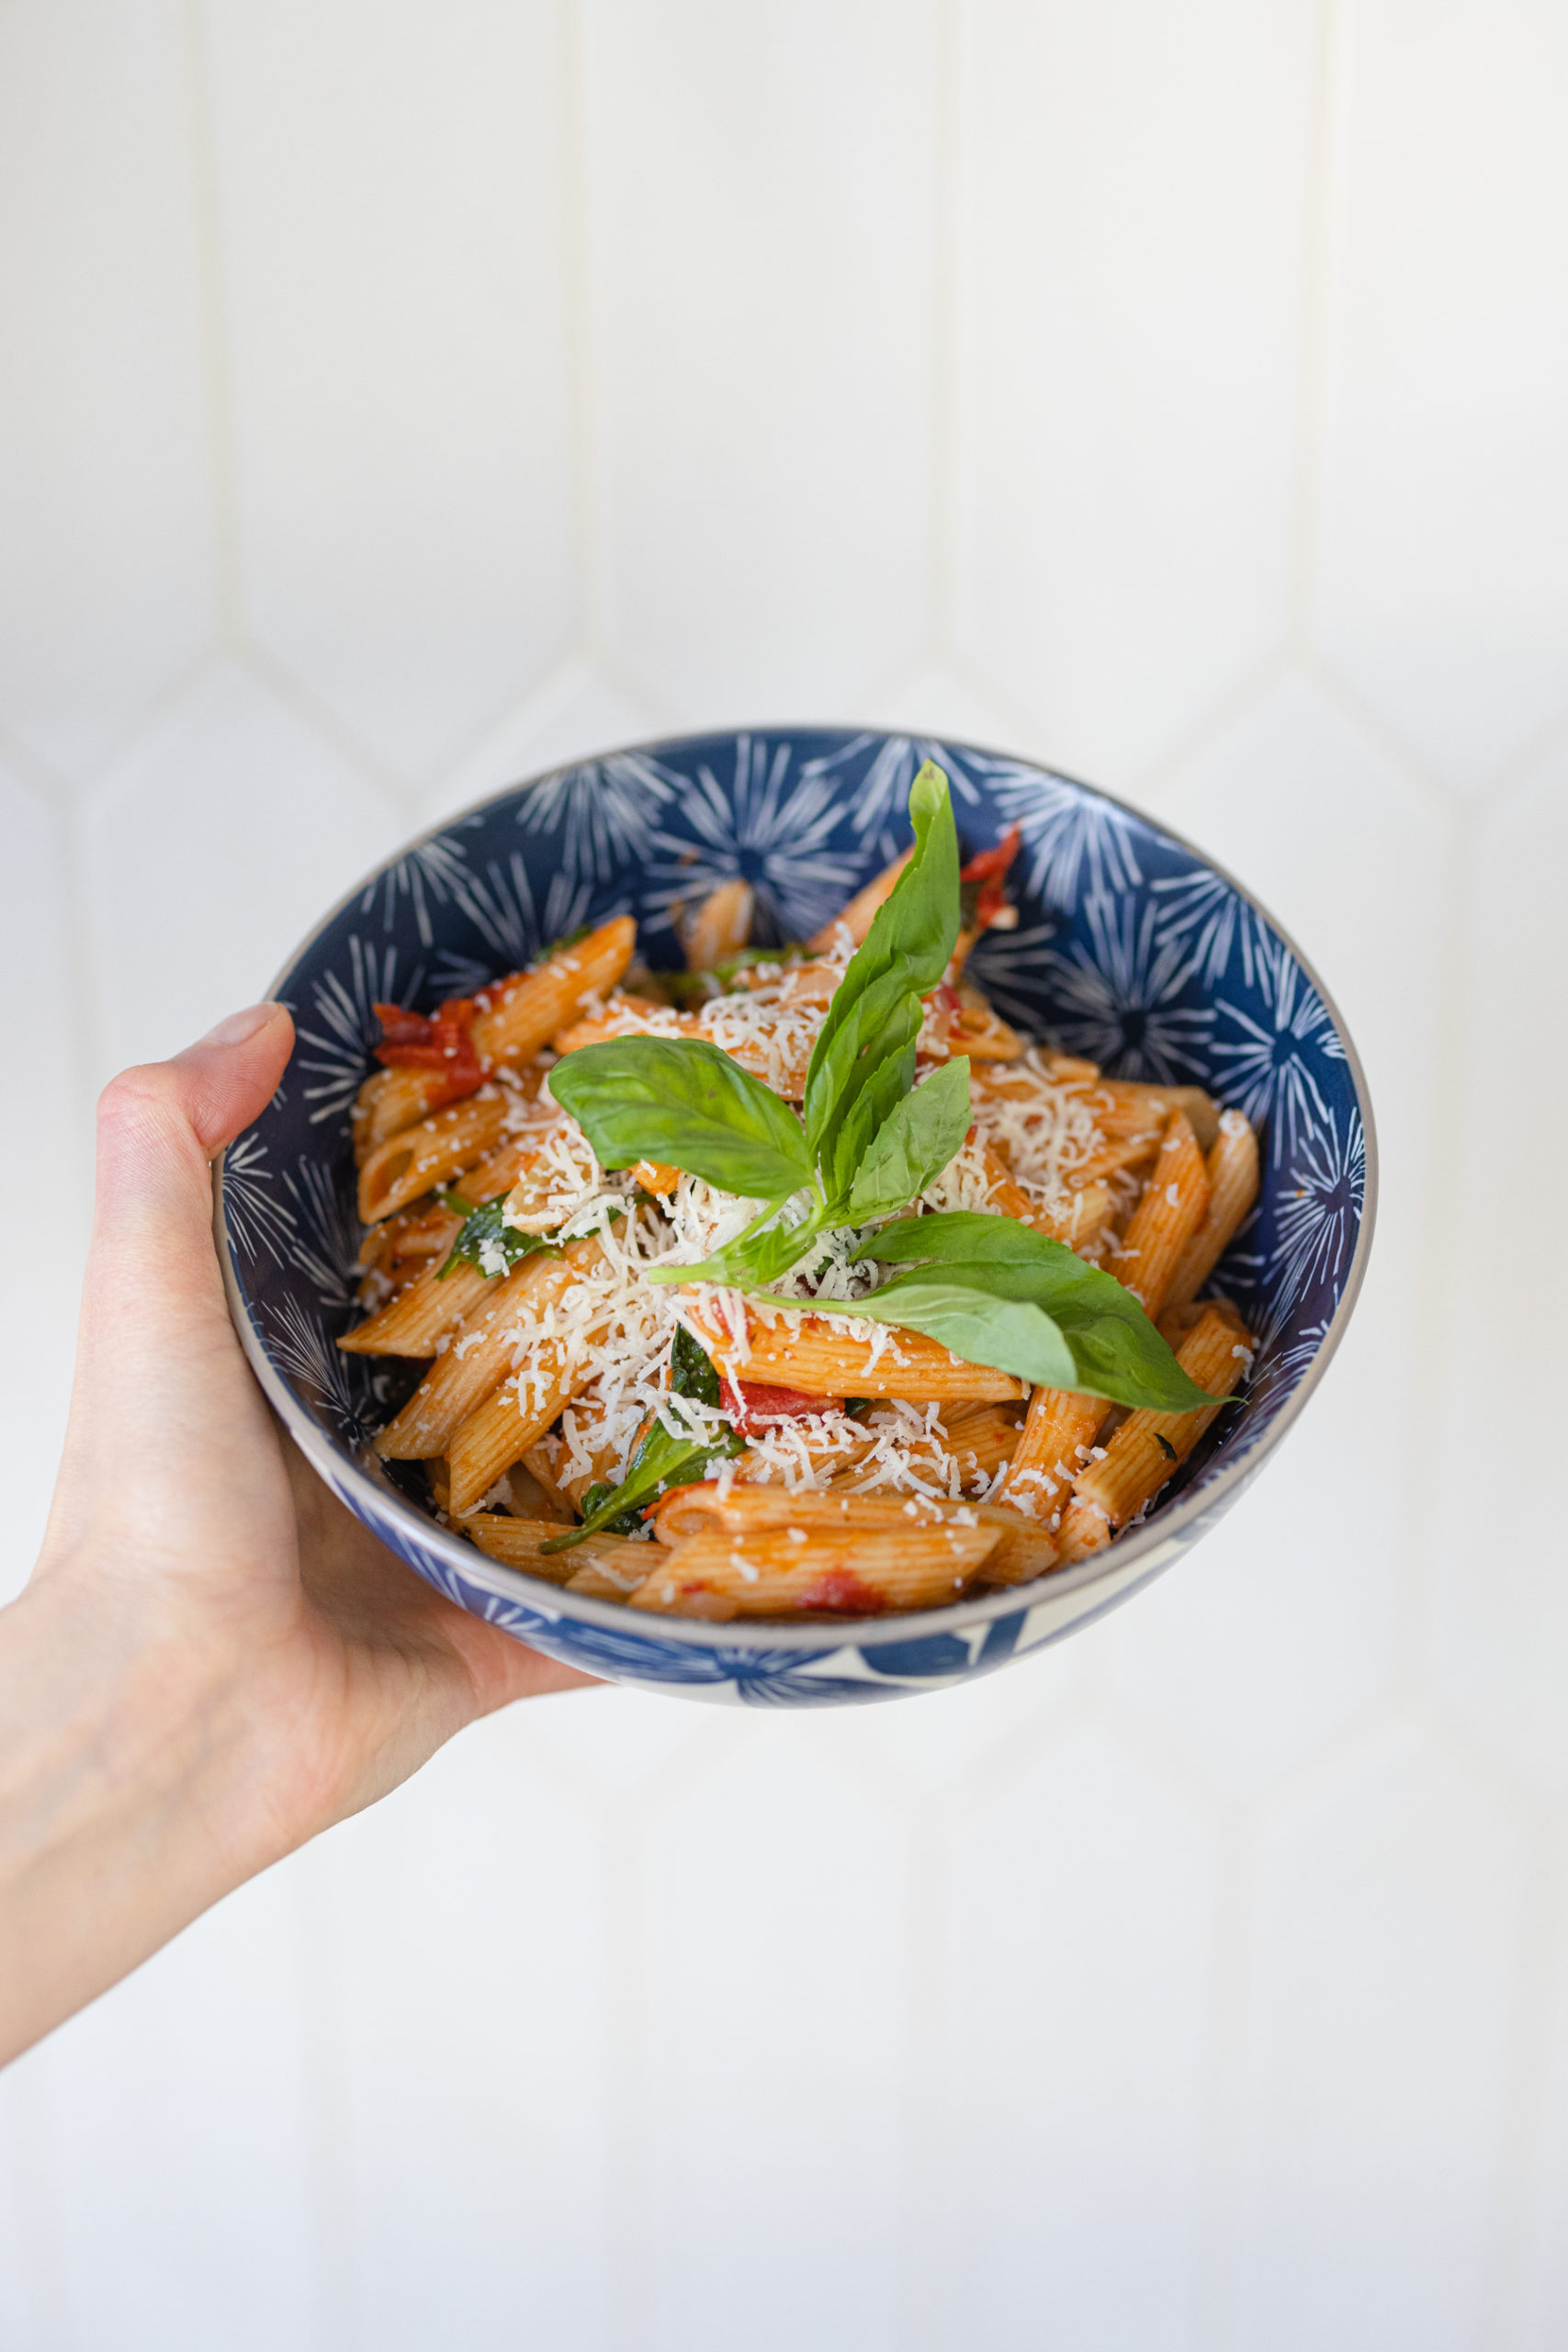 Eva Amurri shares a one-pot tomato basil pasta recipe